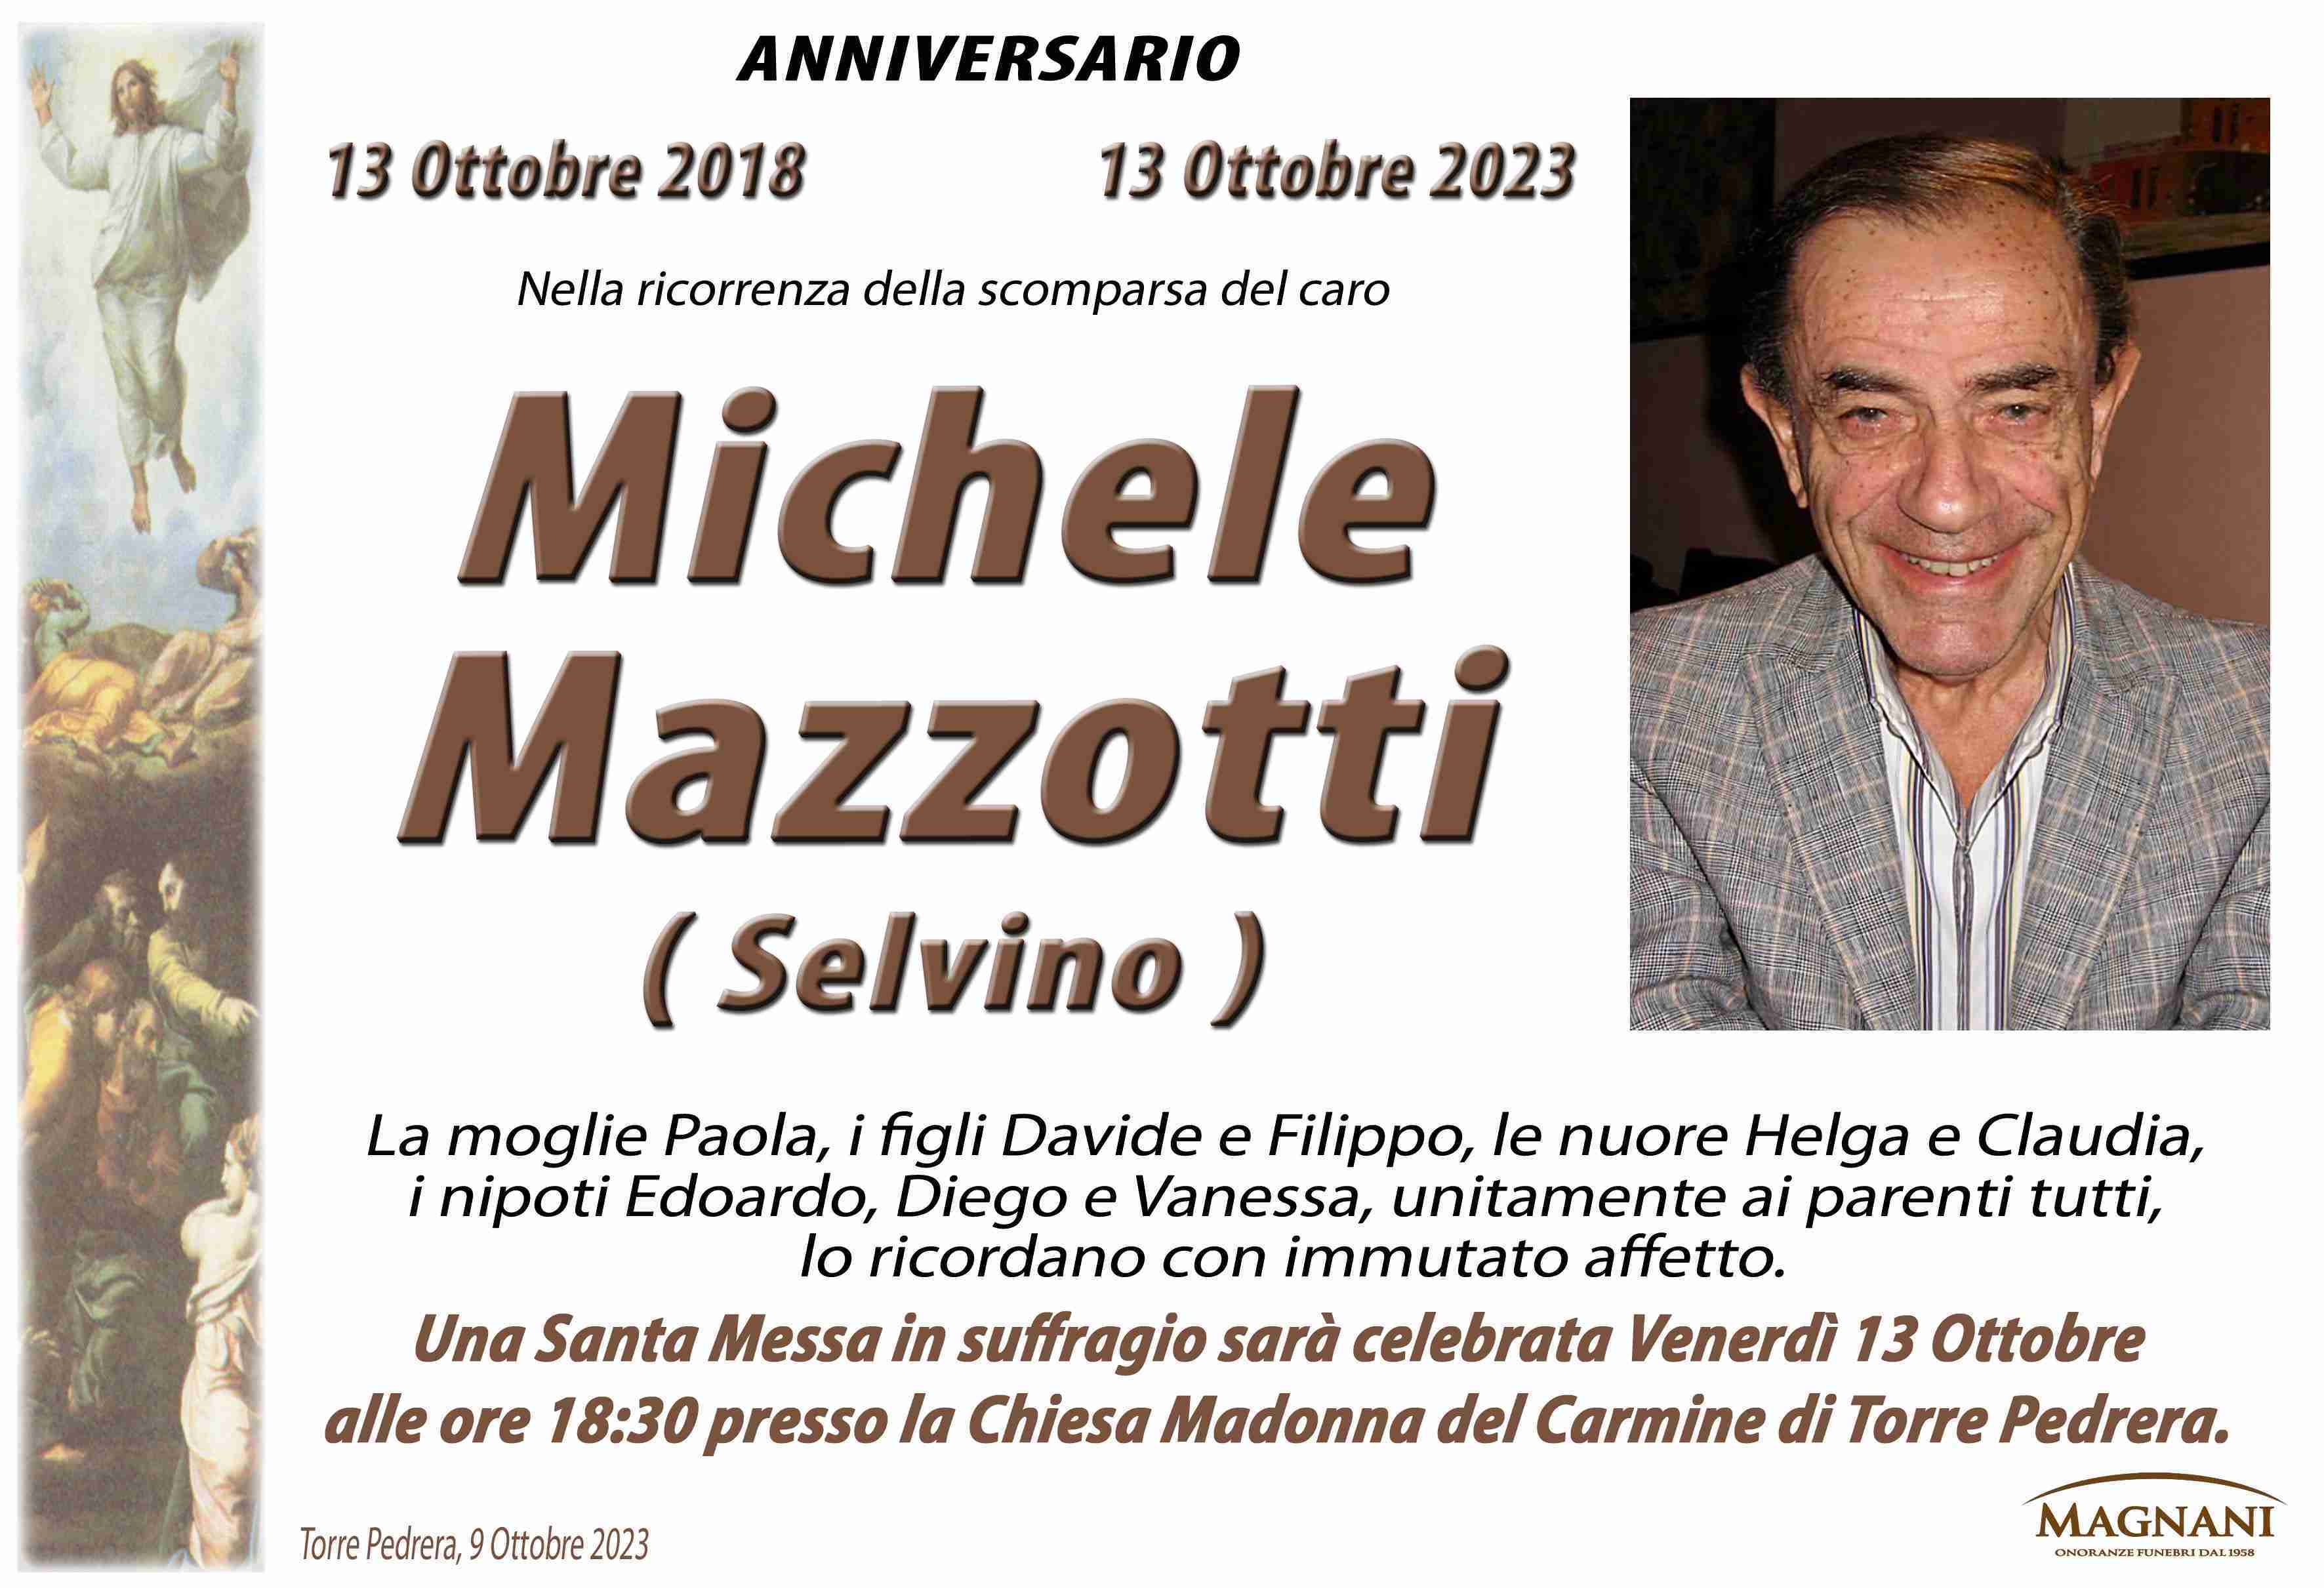 Michele Mazzotti